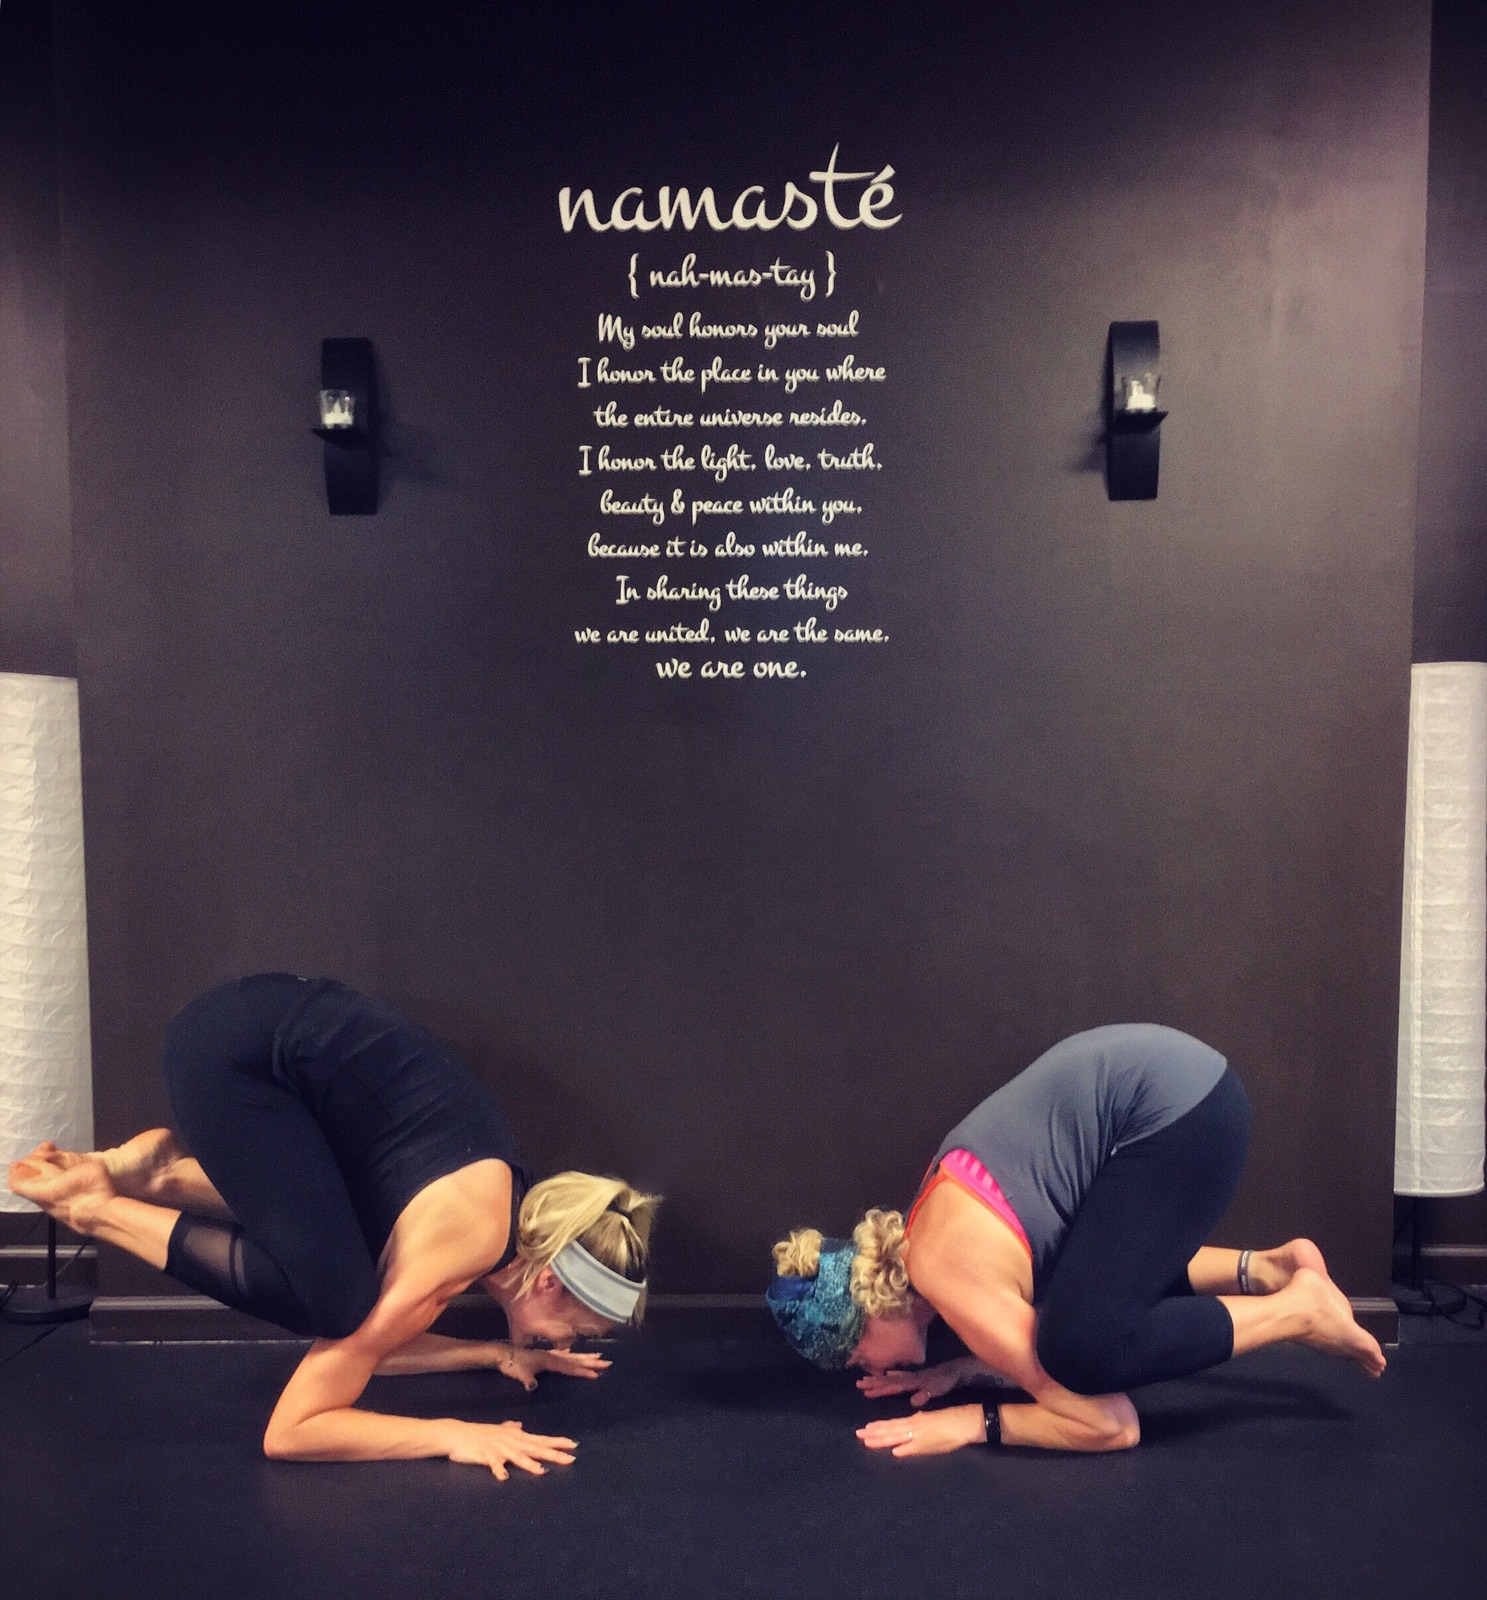 namaste quote on wall women doing yoga pose